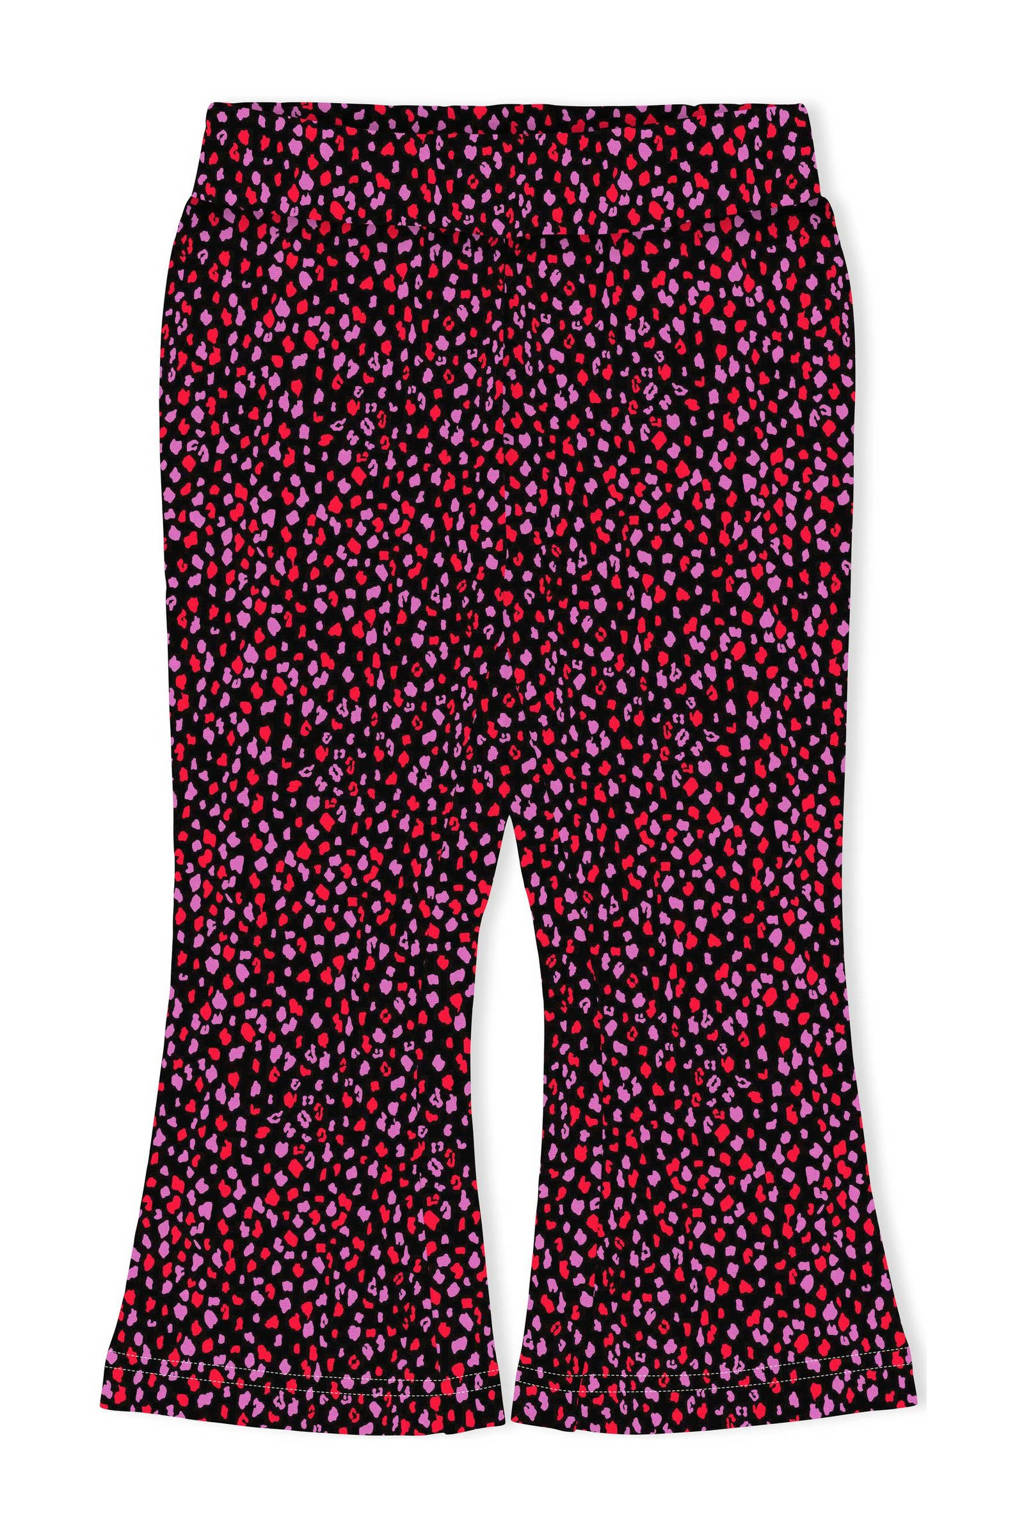 KIDS ONLY MINI flared broek KOMPAIGE met all over print zwart/rood/roze